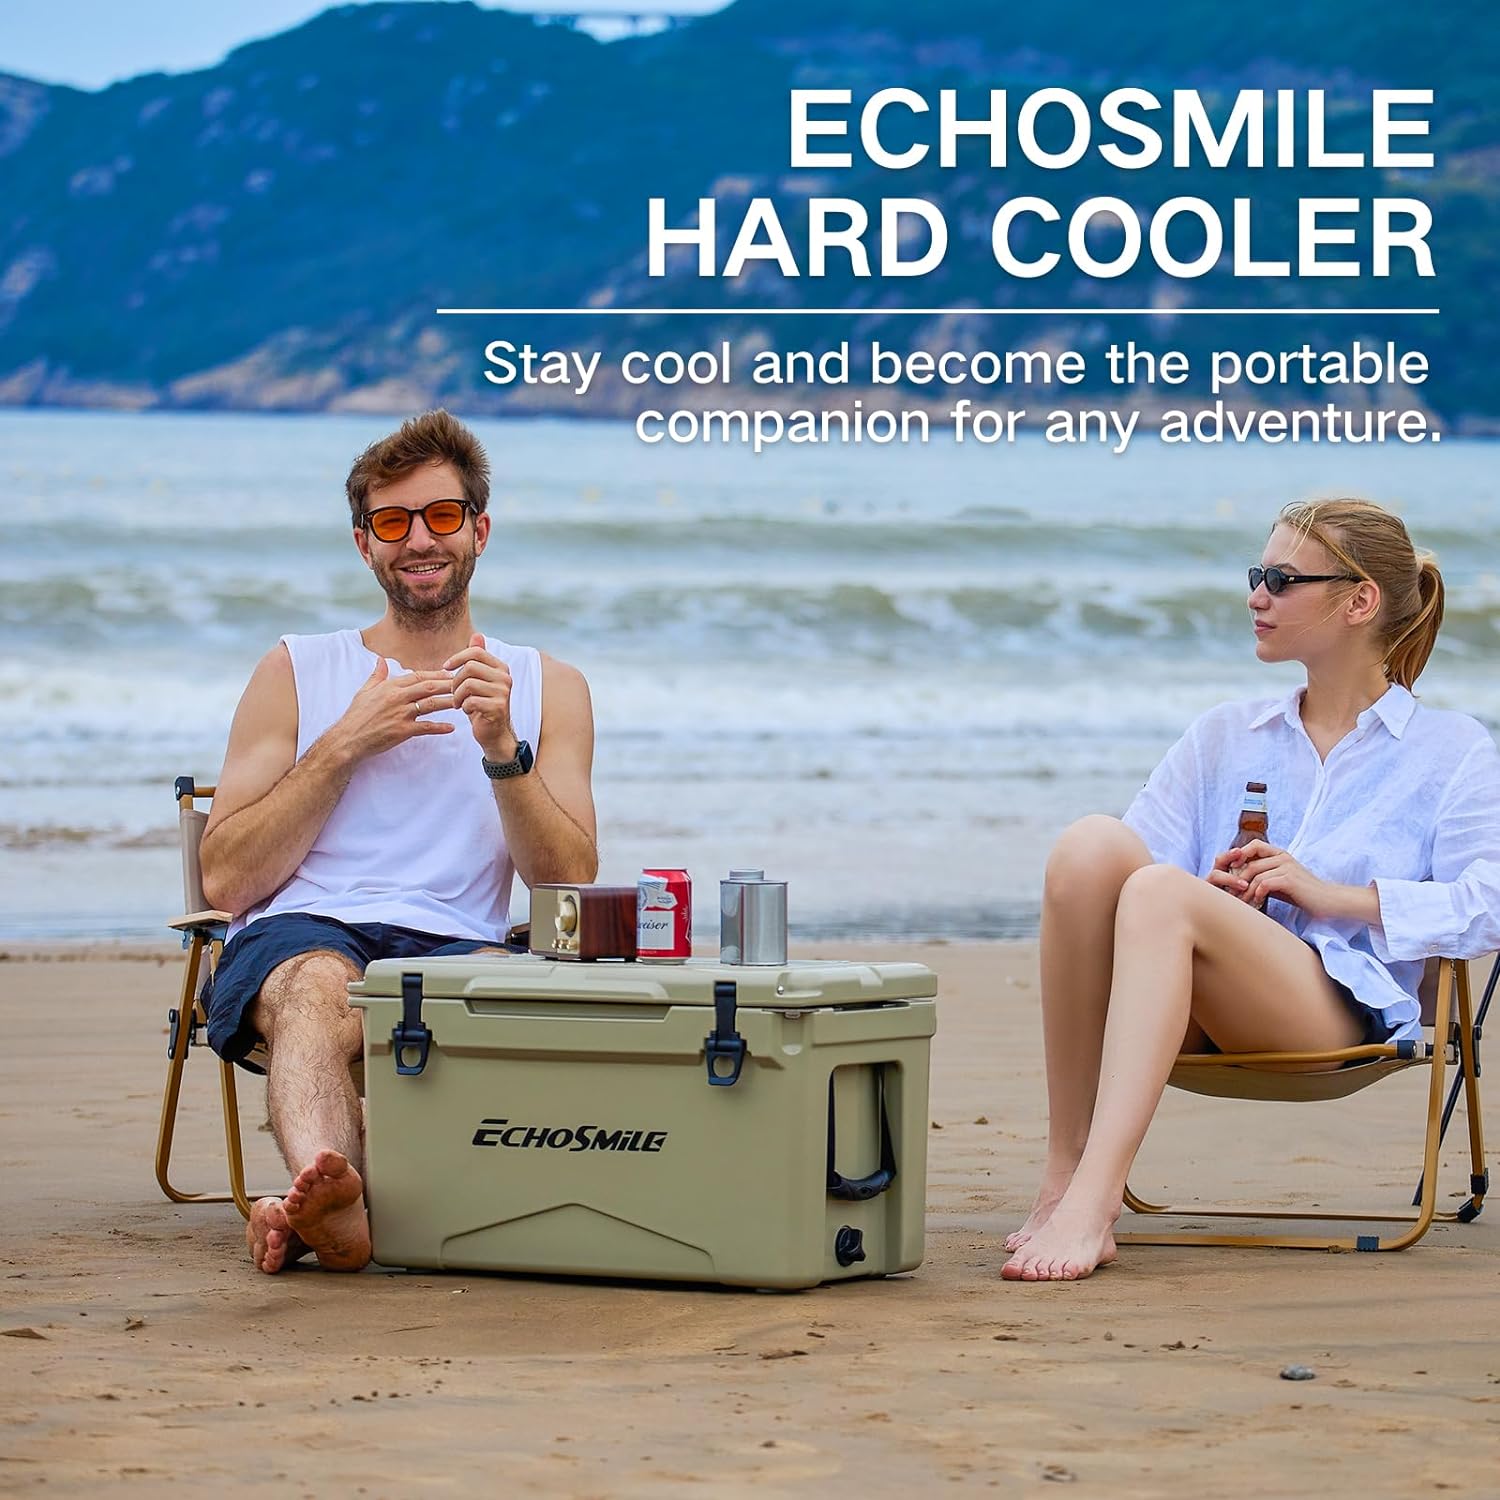 EchoSmile Rotomolded Cooler design